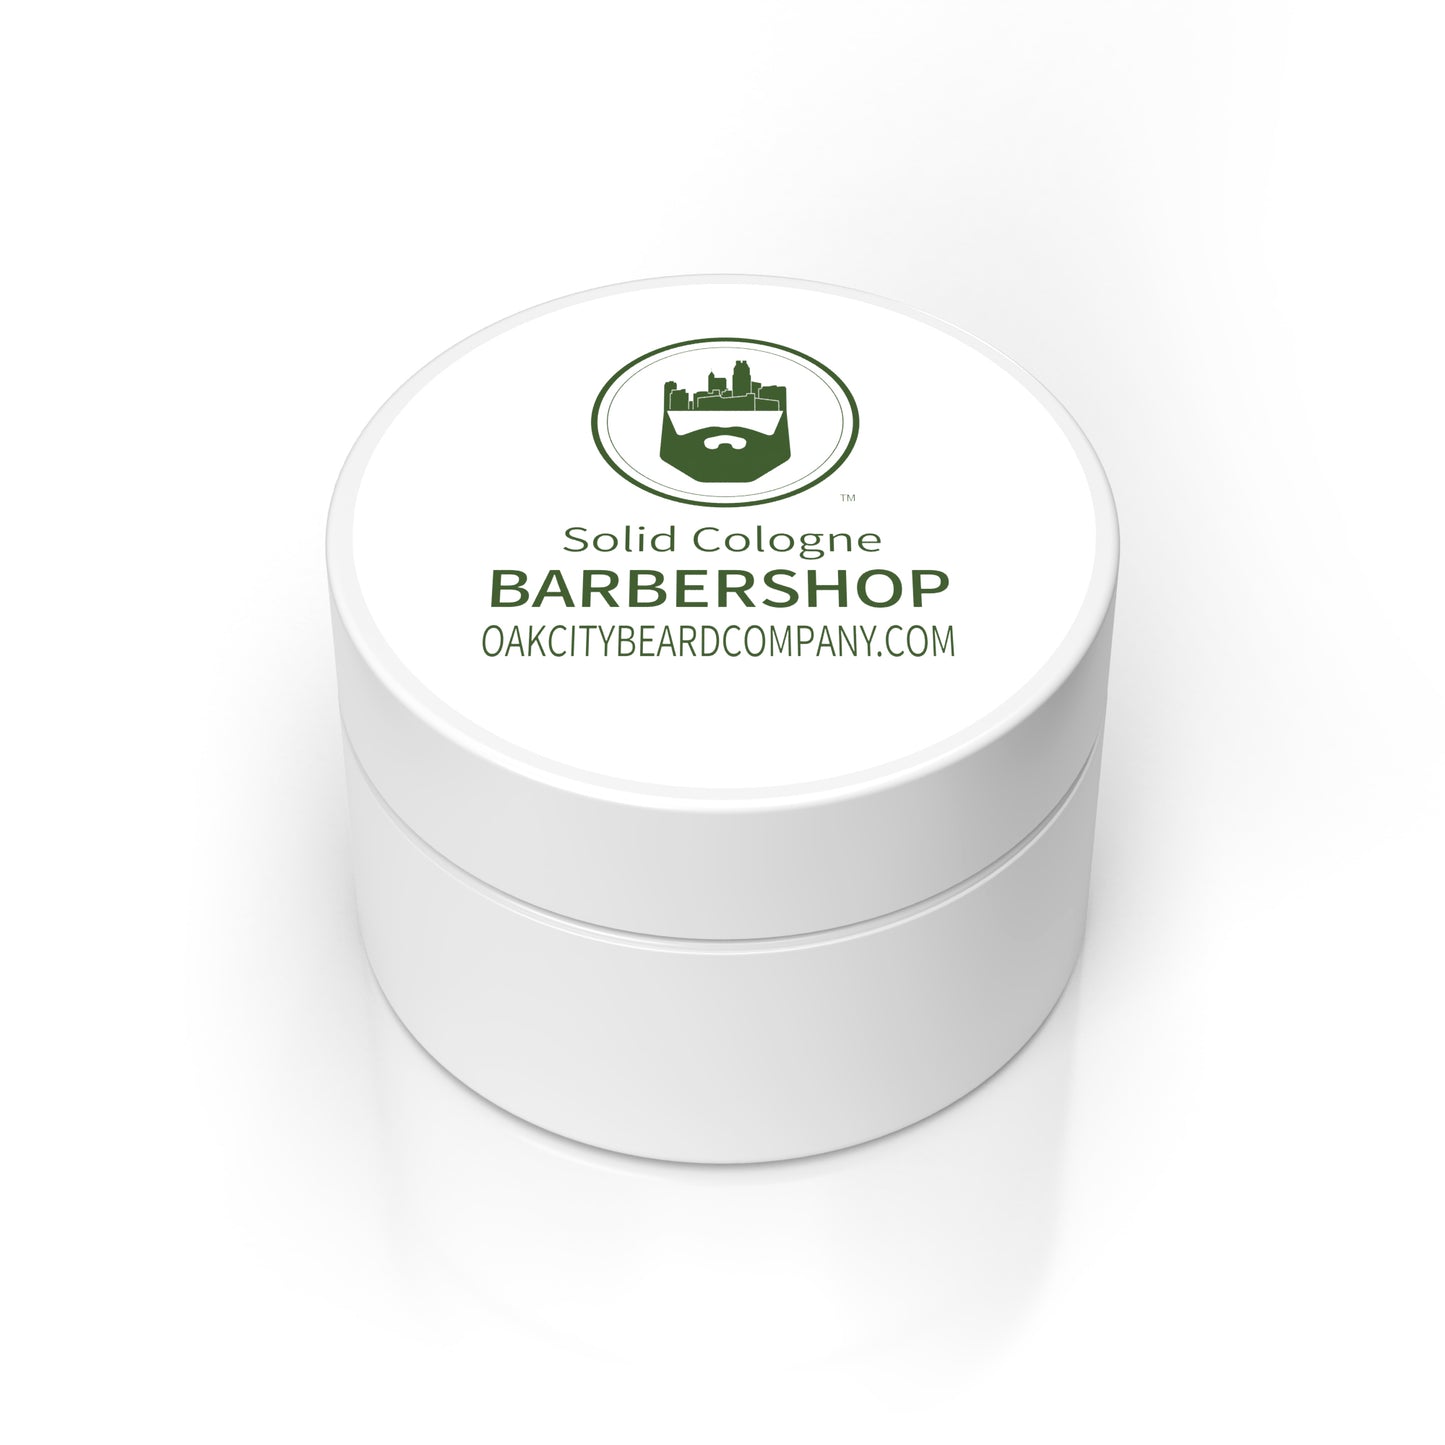 BarberShop (Solid Cologne) by Oak City Beard Company